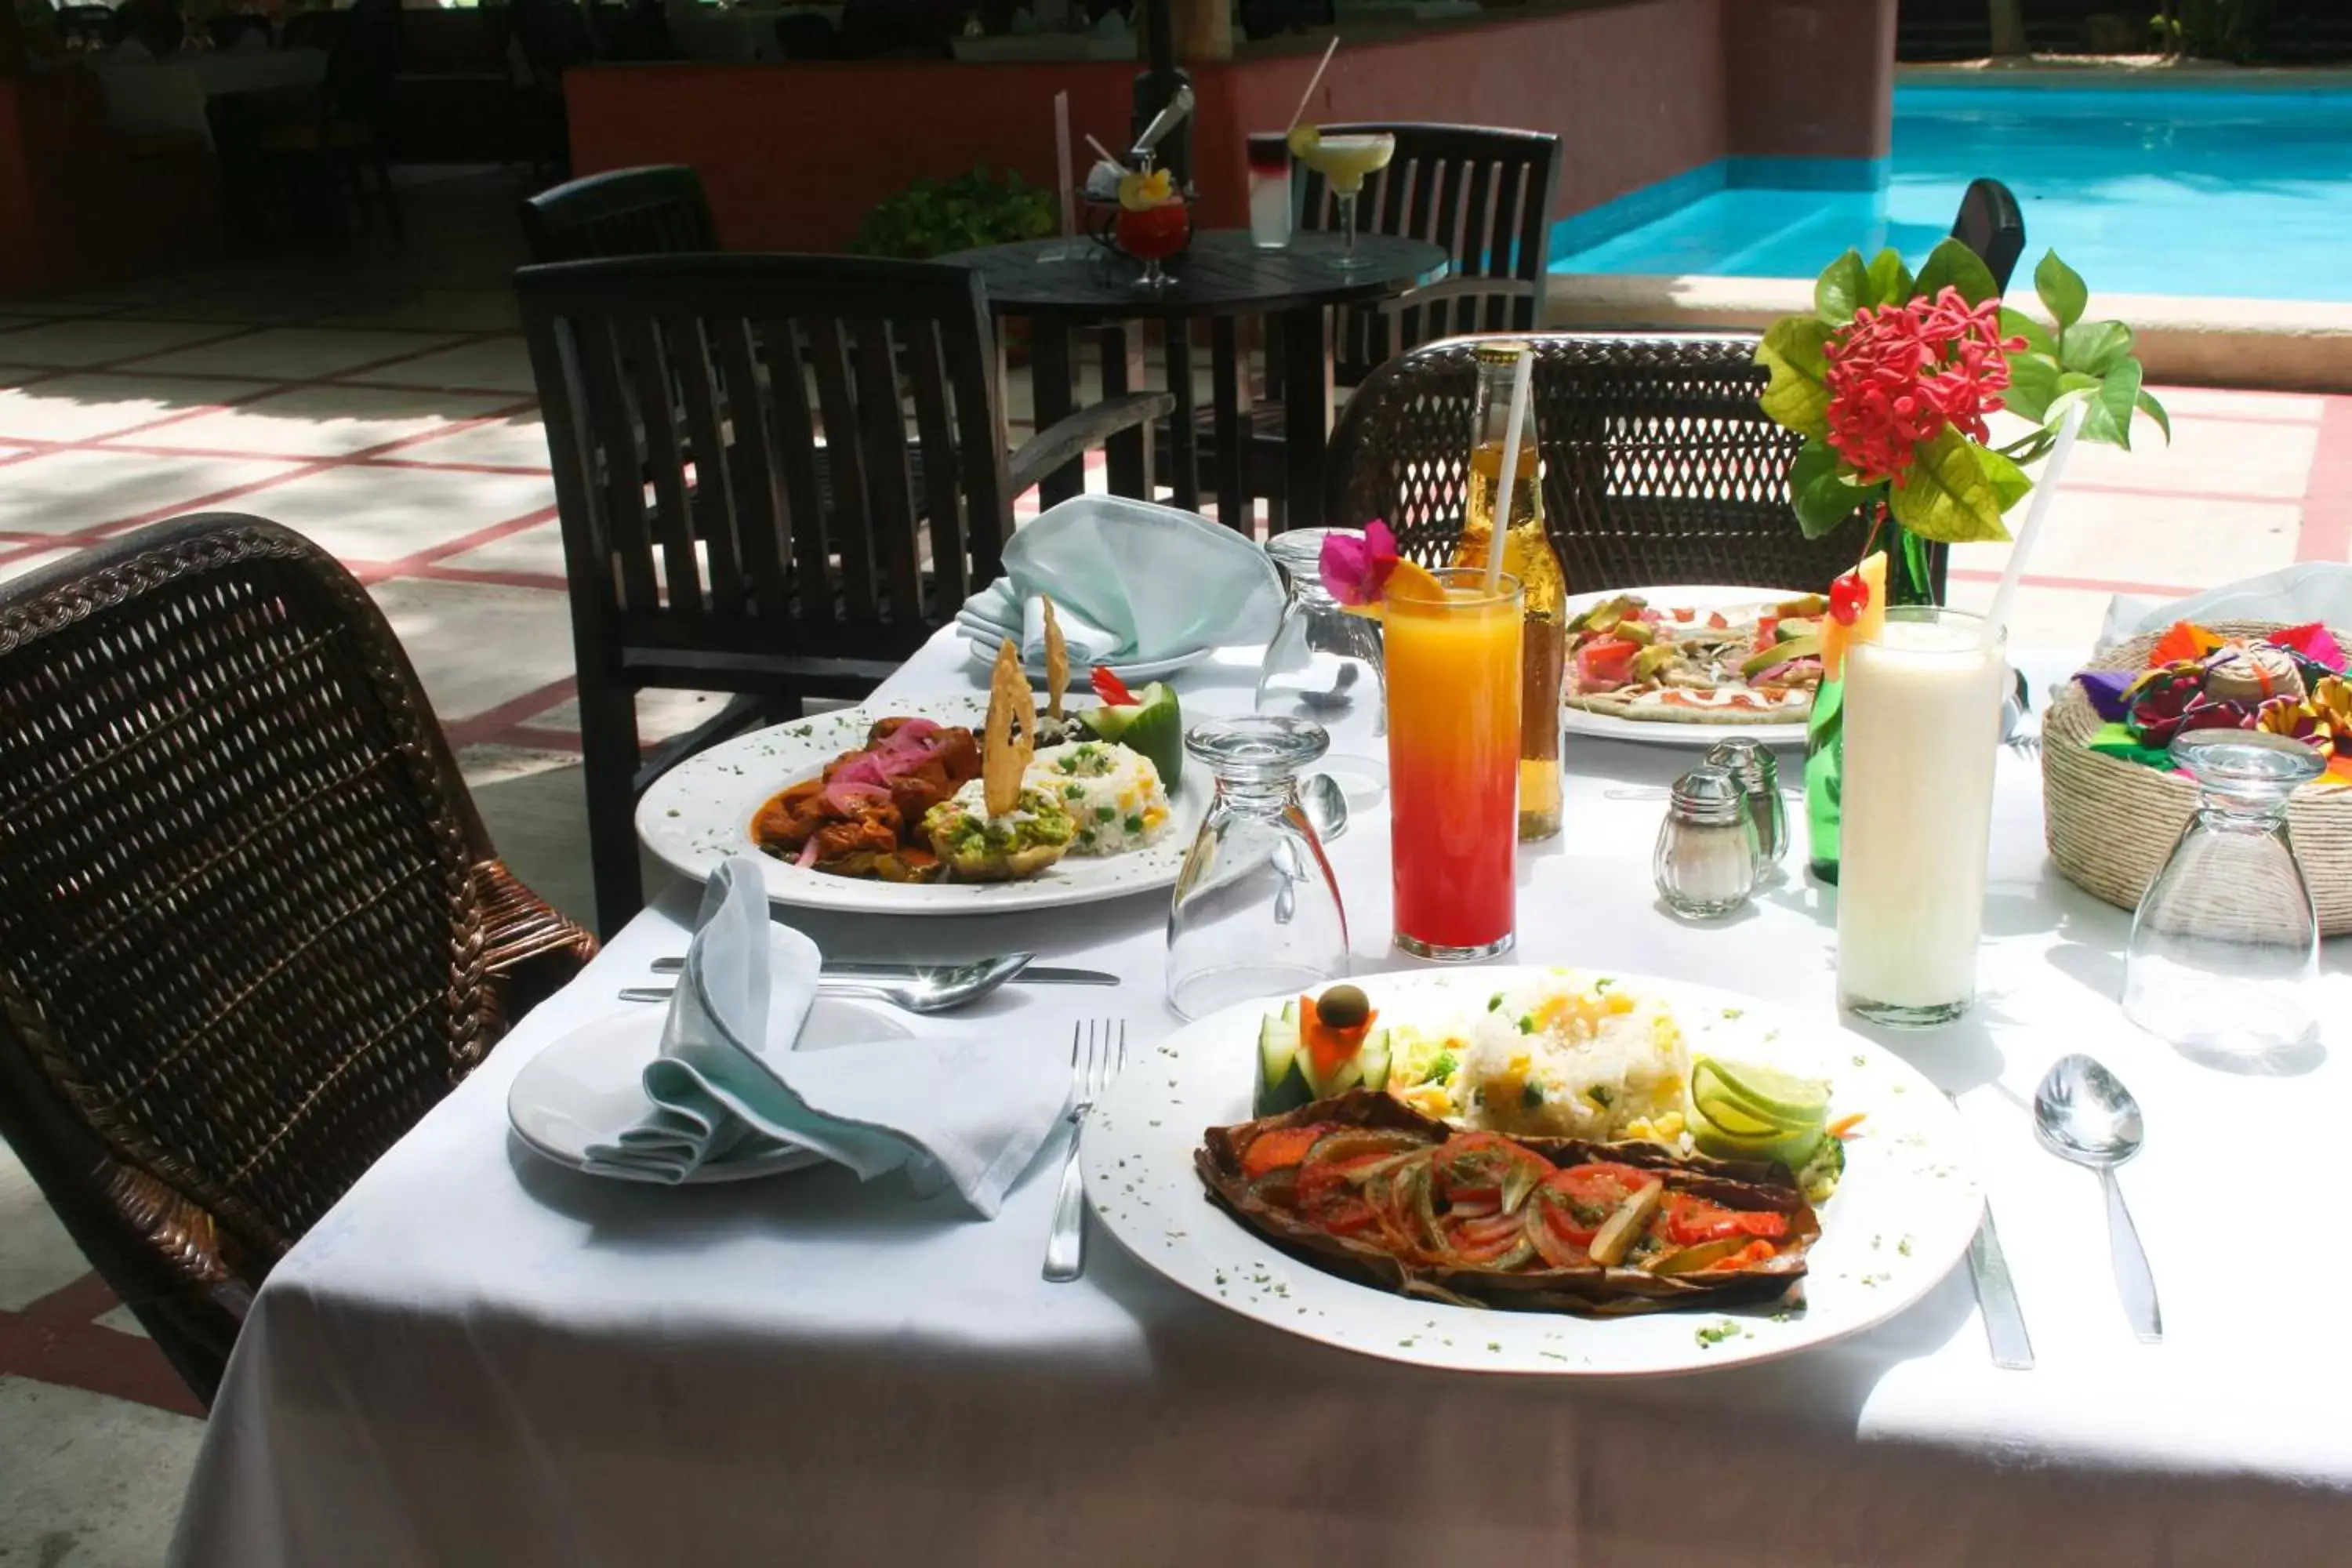 Food close-up, Lunch and Dinner in Villas Arqueologicas Chichen Itza